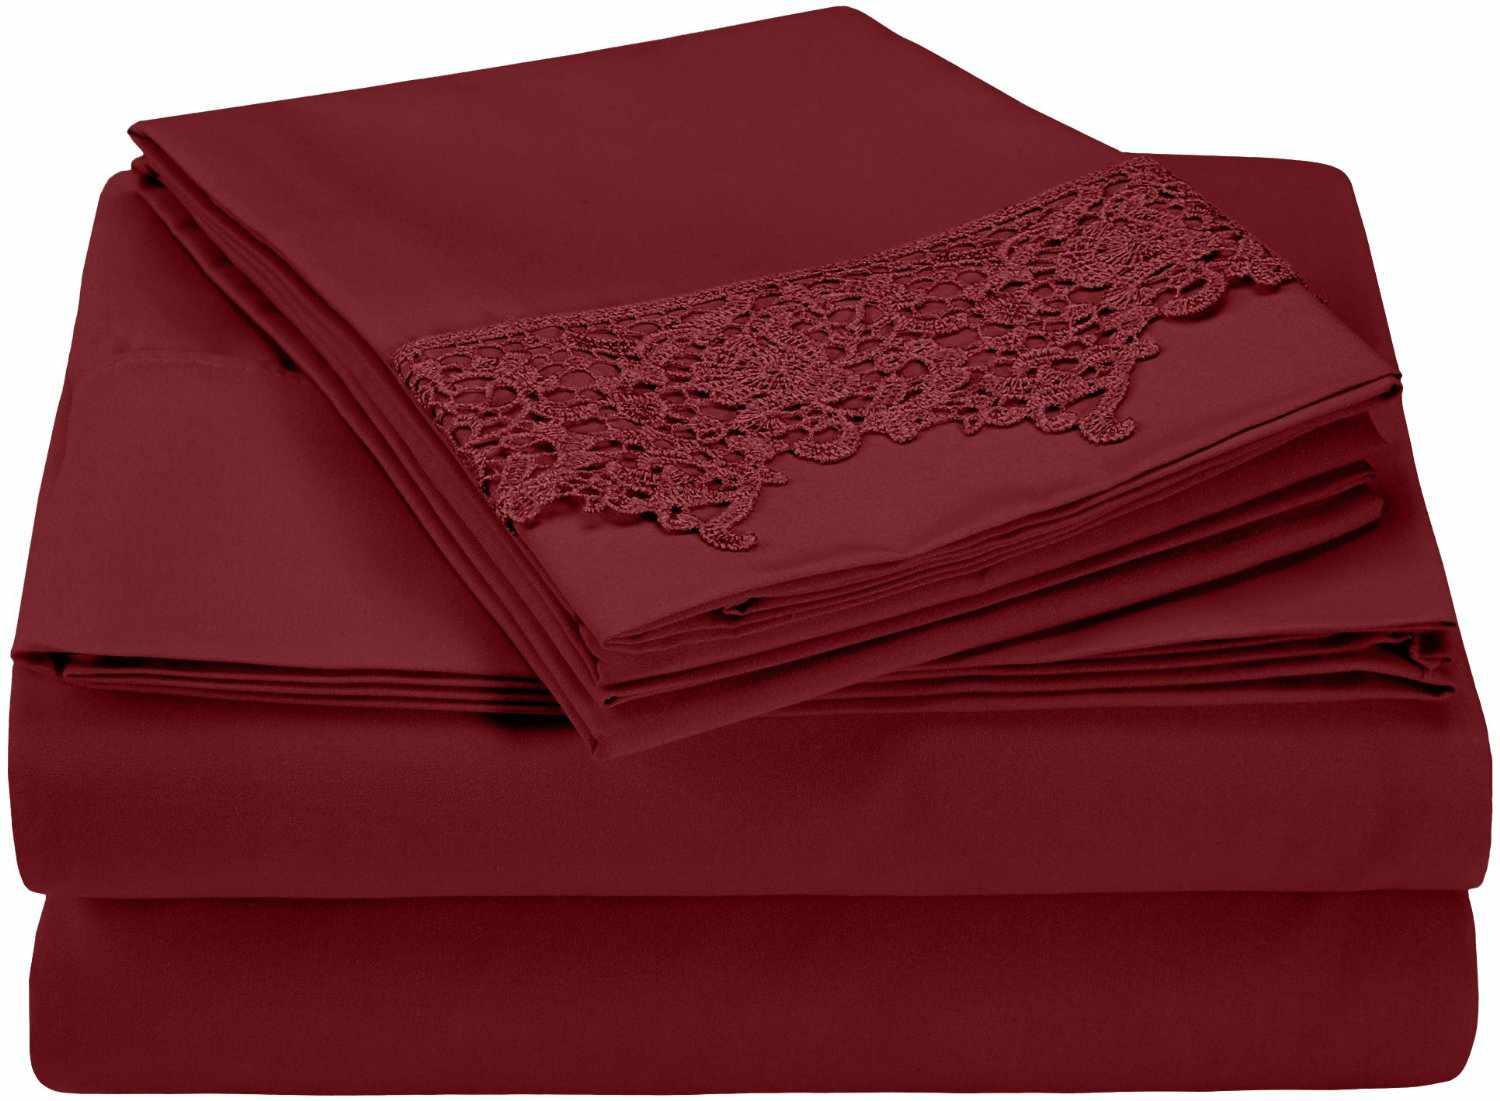 Superior Lace Overlay Solid Wrinkle Resistant Sheet Set  -Burgundy